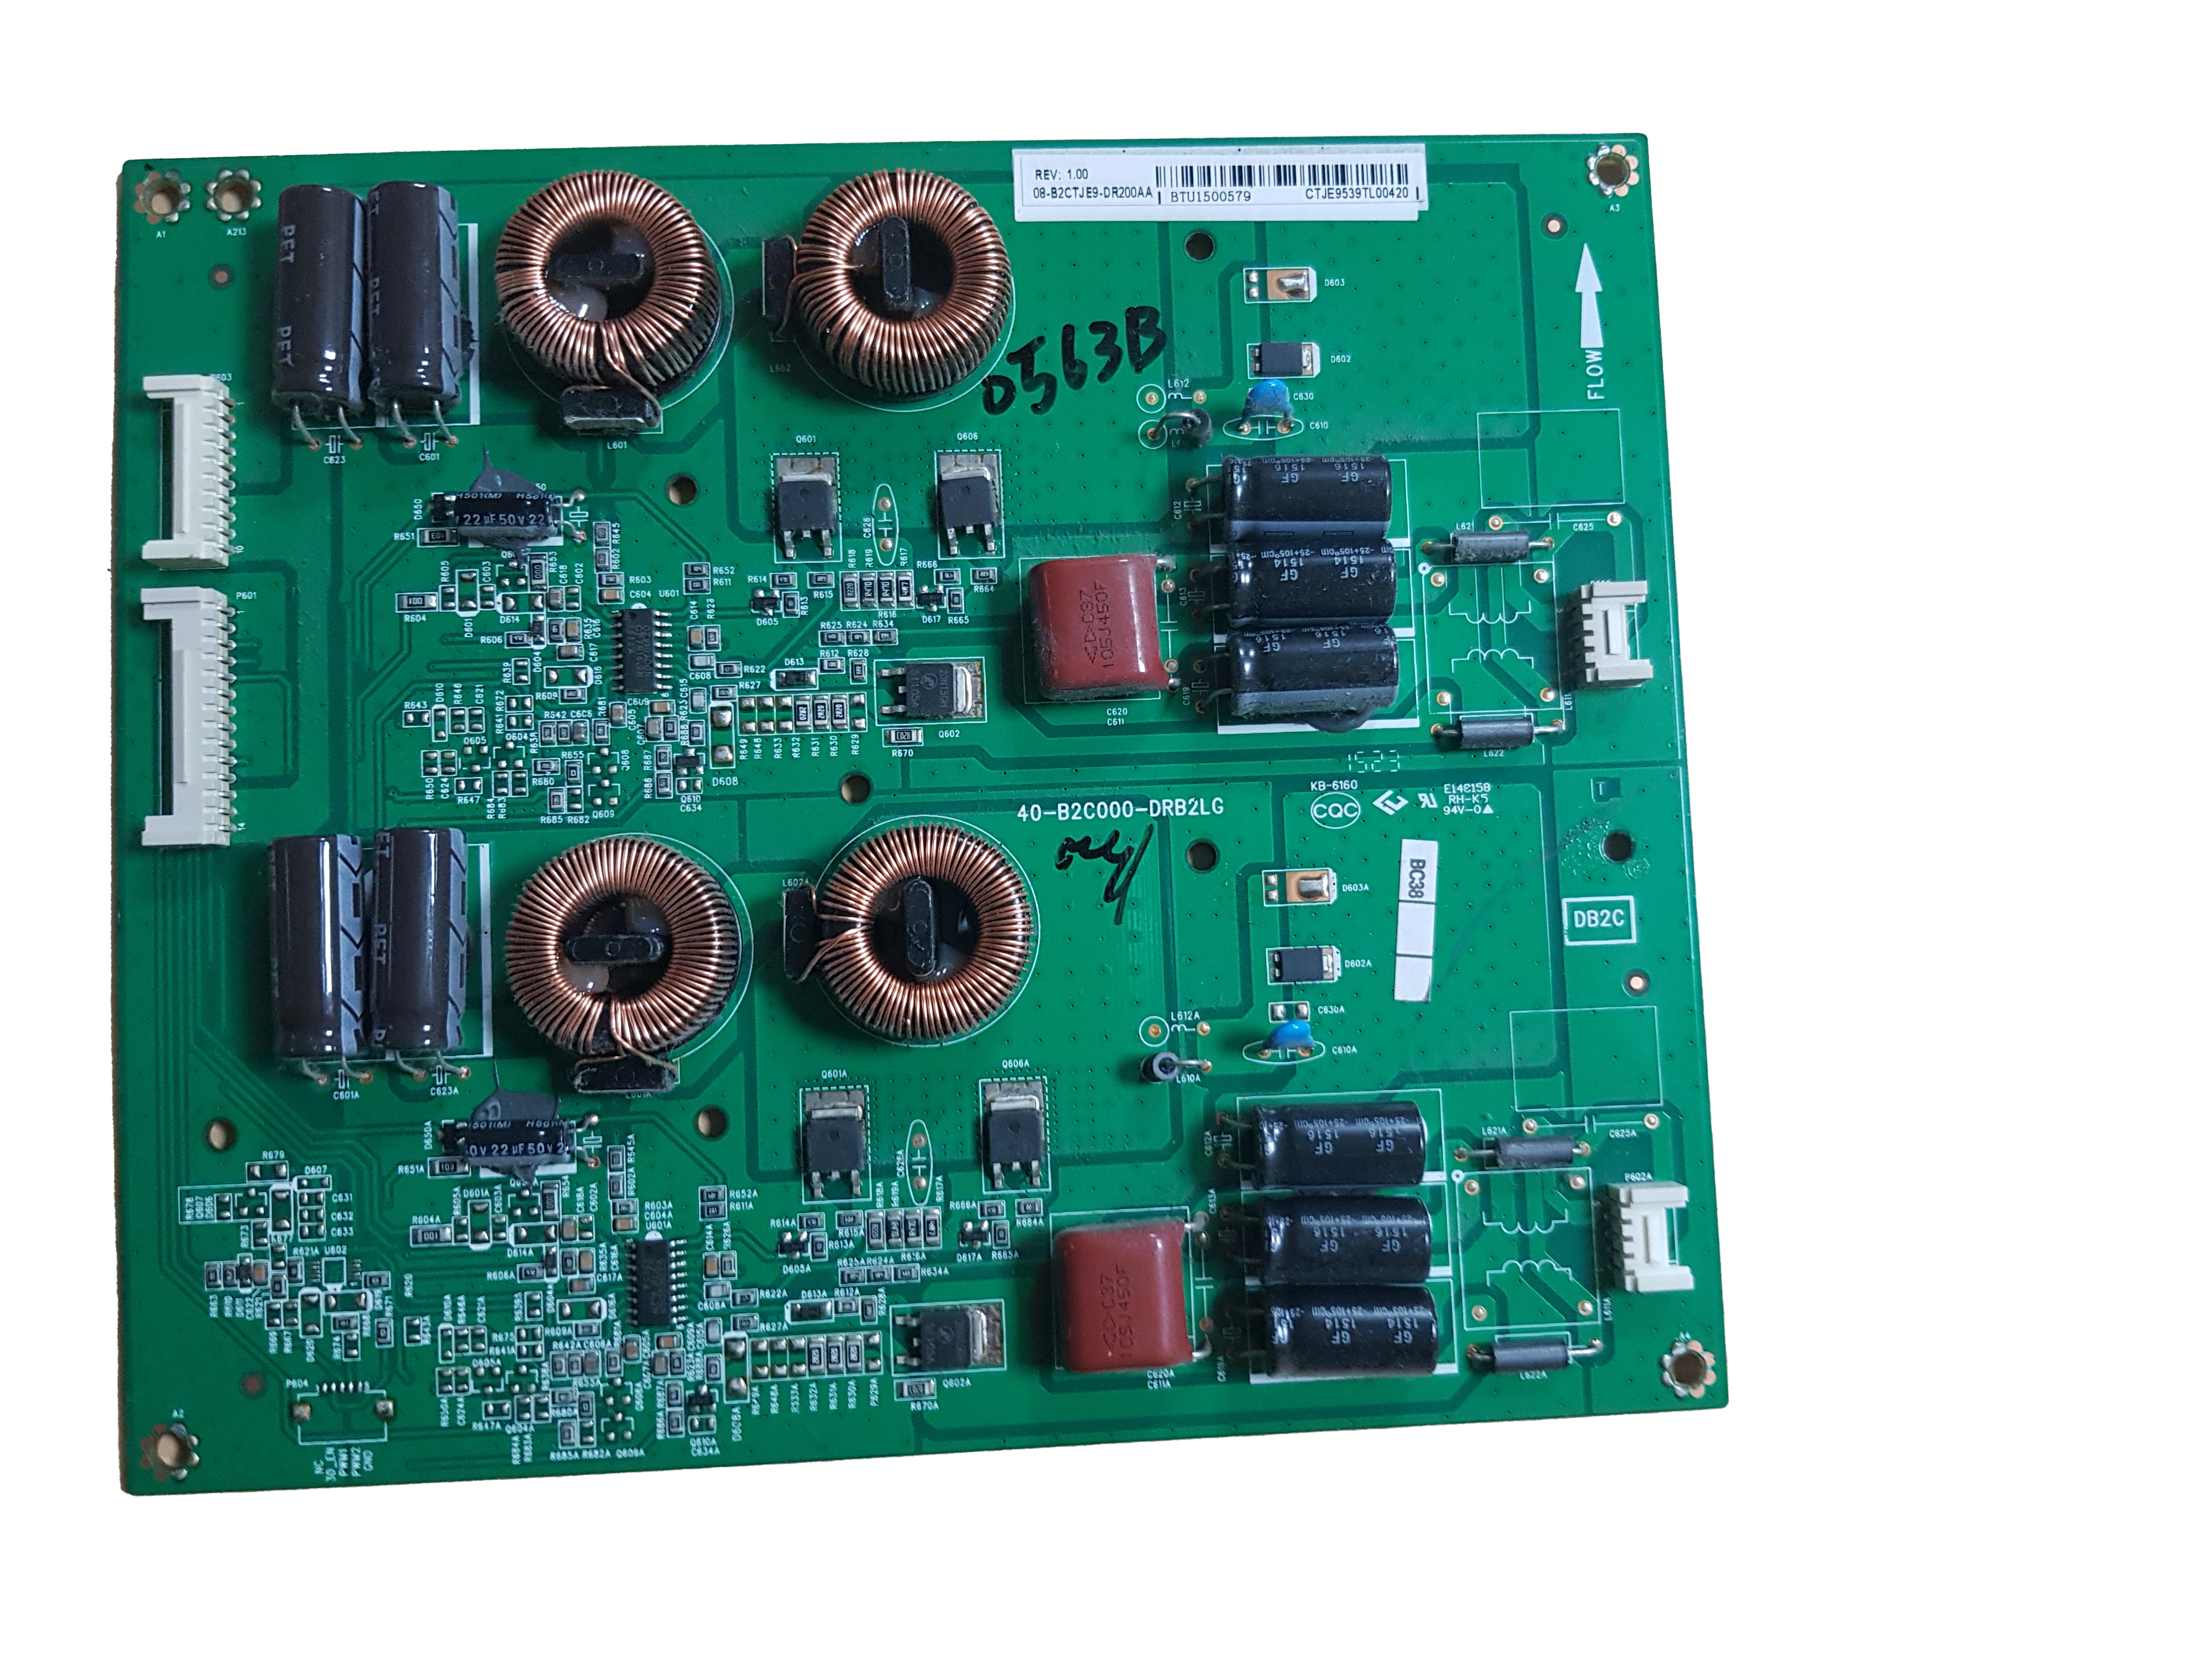 Module d'alimentation 40-b2c000-0rb2cg compatible Thomson 654a8796 - Picture 1 of 1